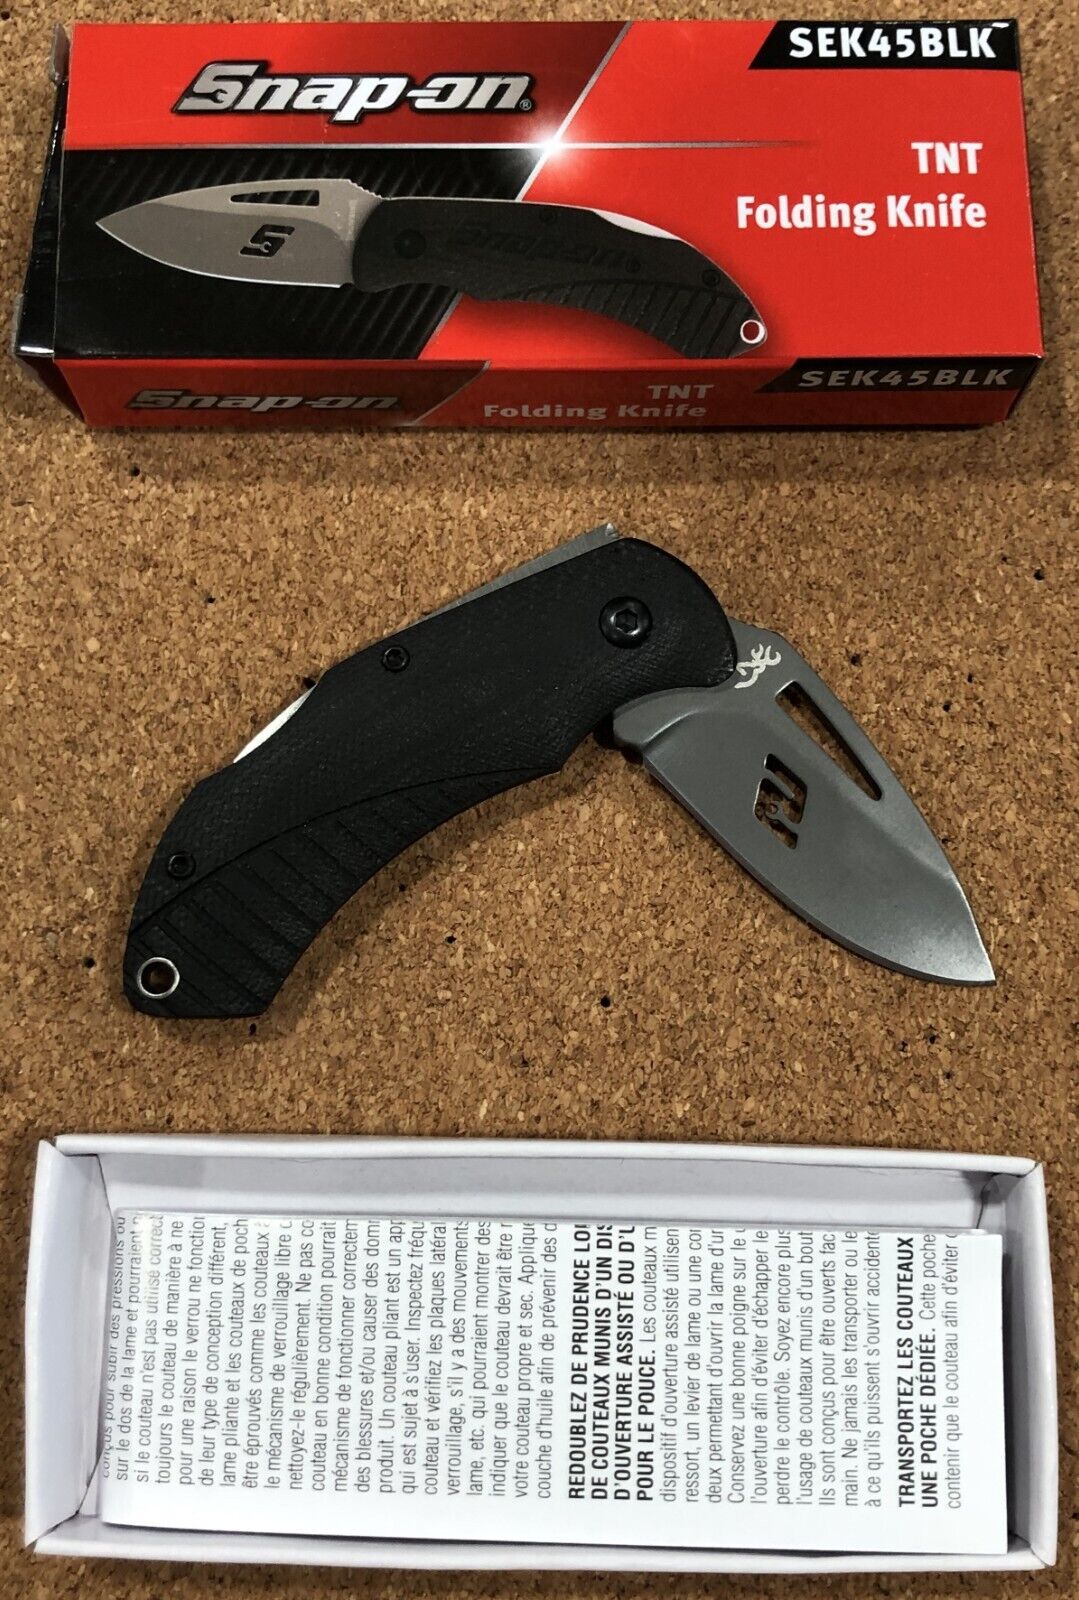 NEW - SNAP-ON Compact Folding Lockback Knife (Black) Browning / Model: SEK45BLK